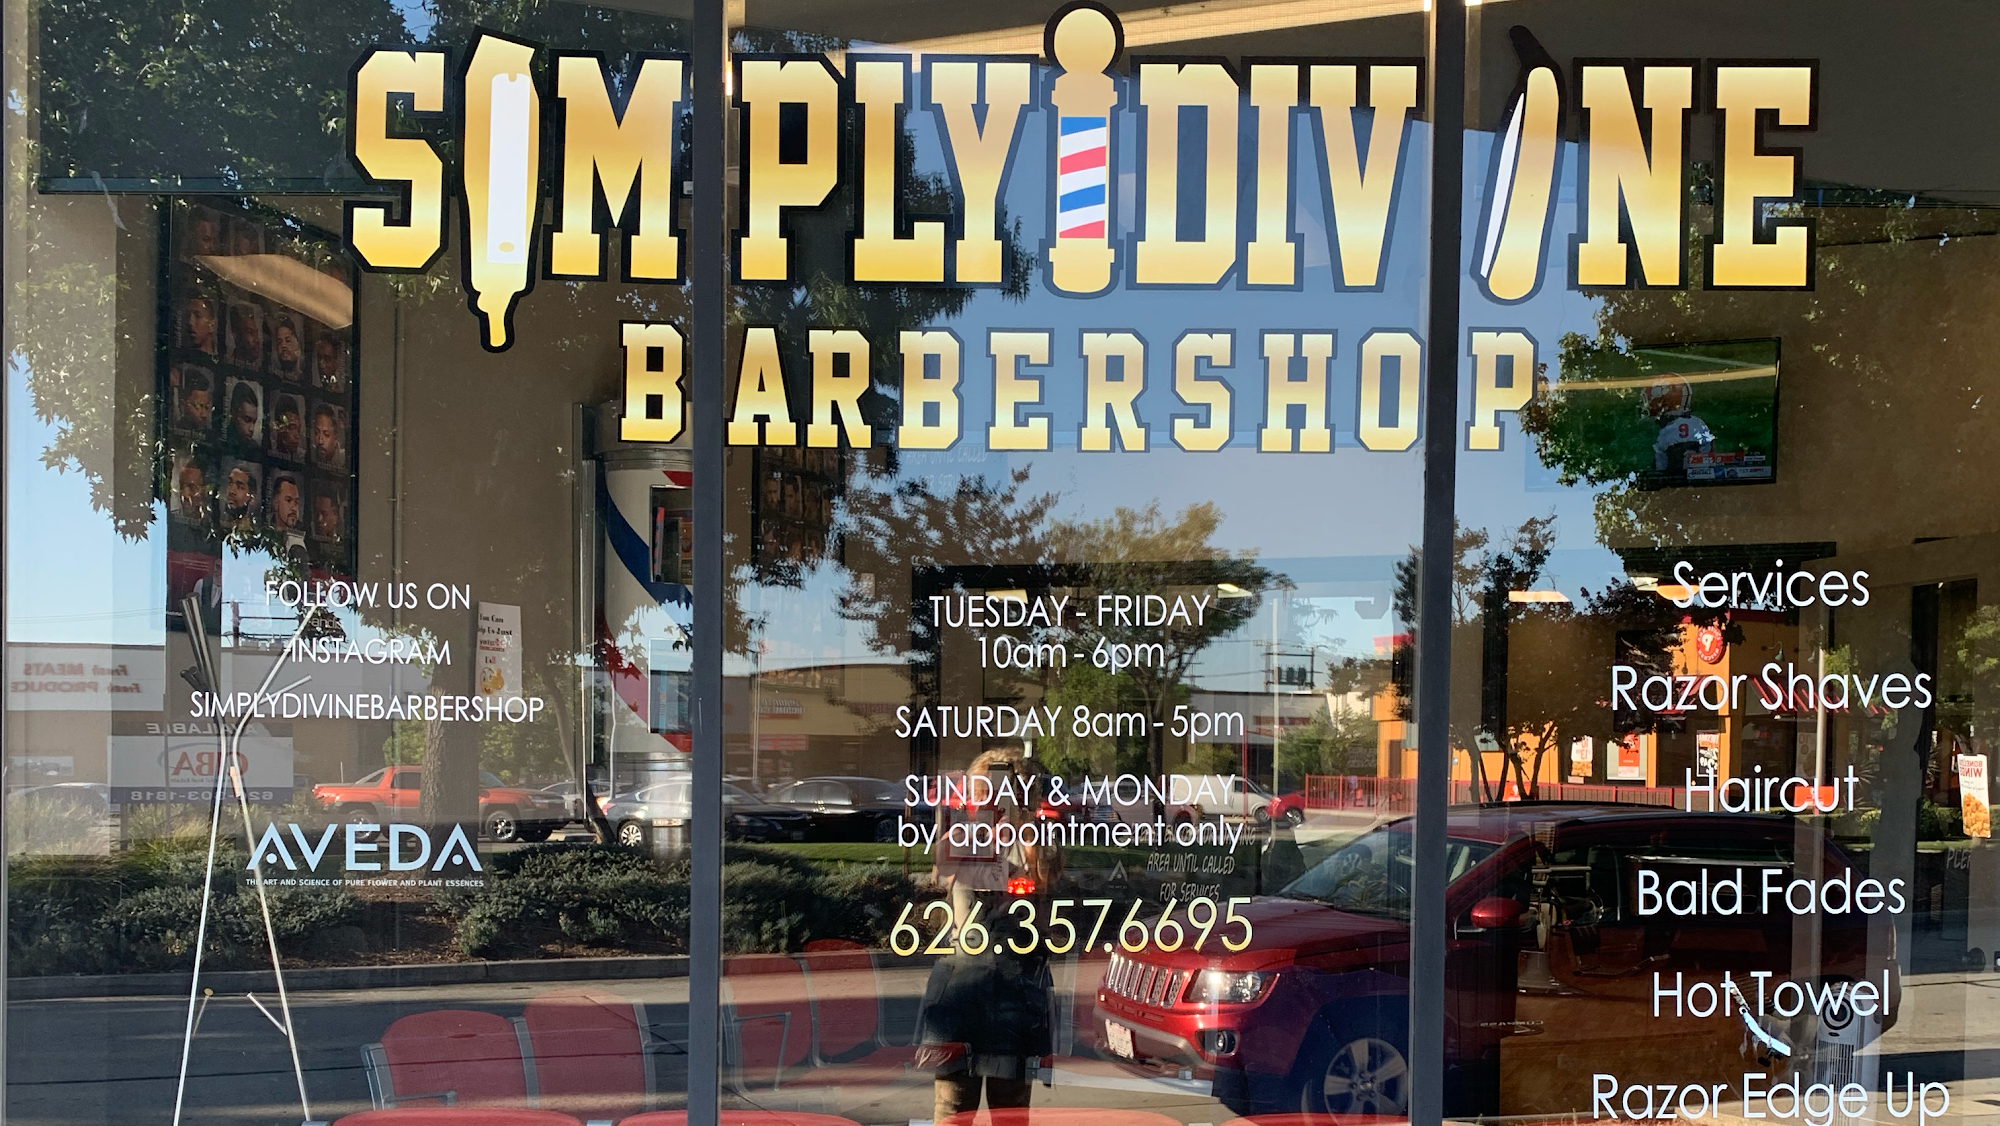 Simply Divine Barber Shop